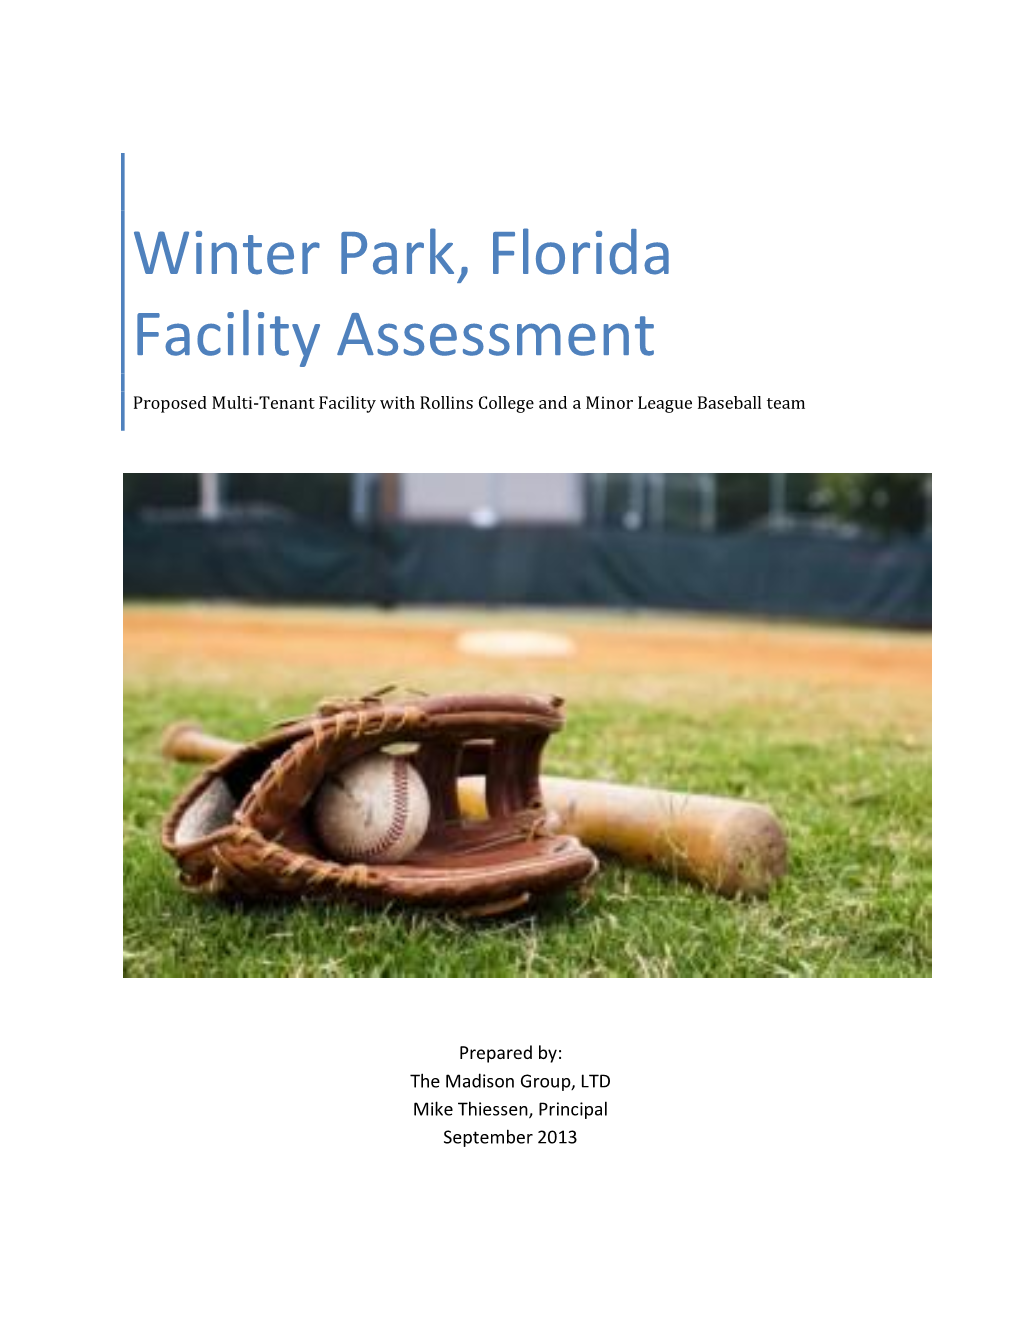 Winter Park, Florida Facility Assessment